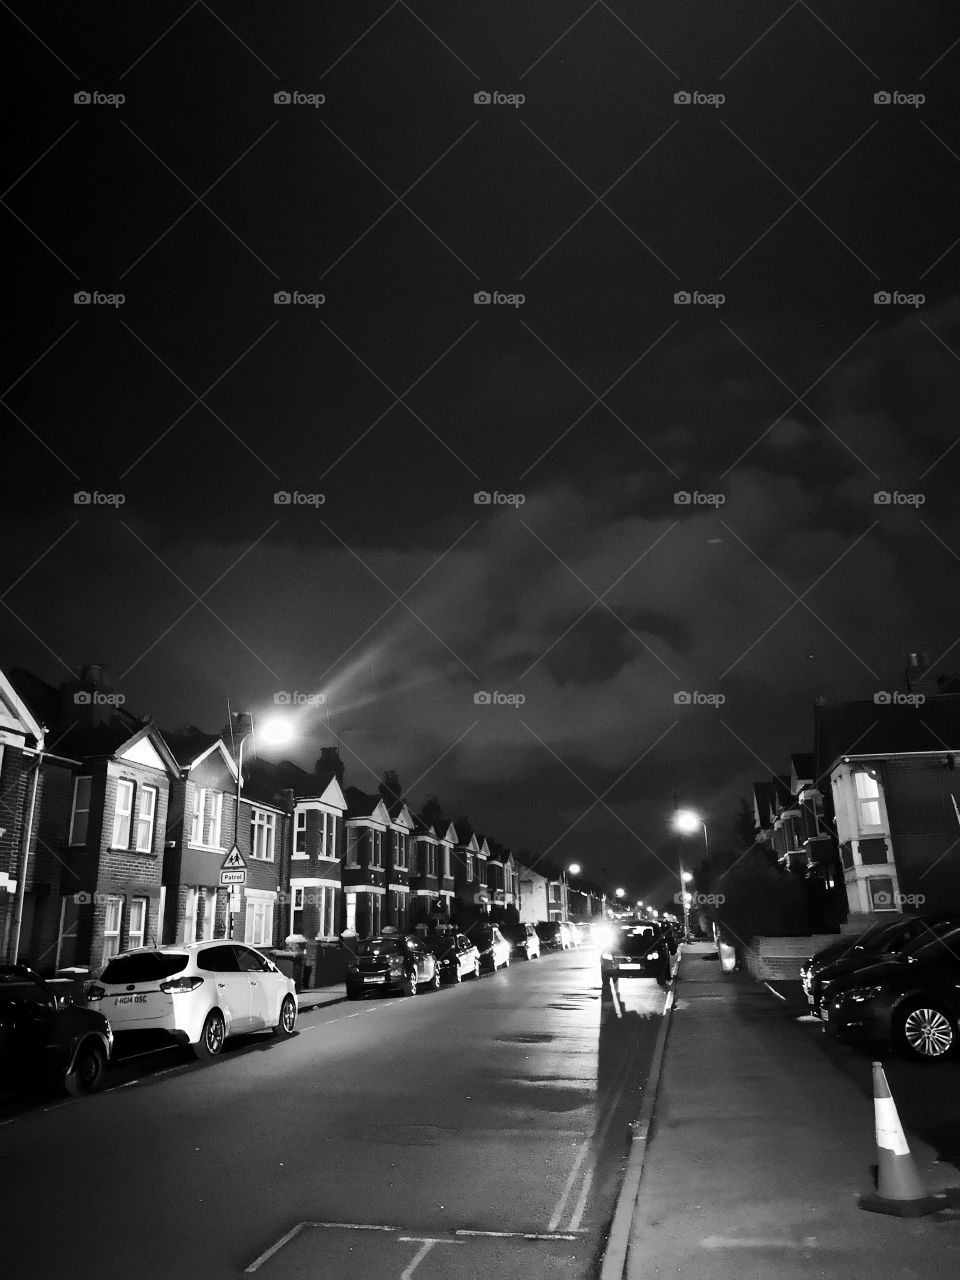 10-11-18 Monochrome pic Southampton City